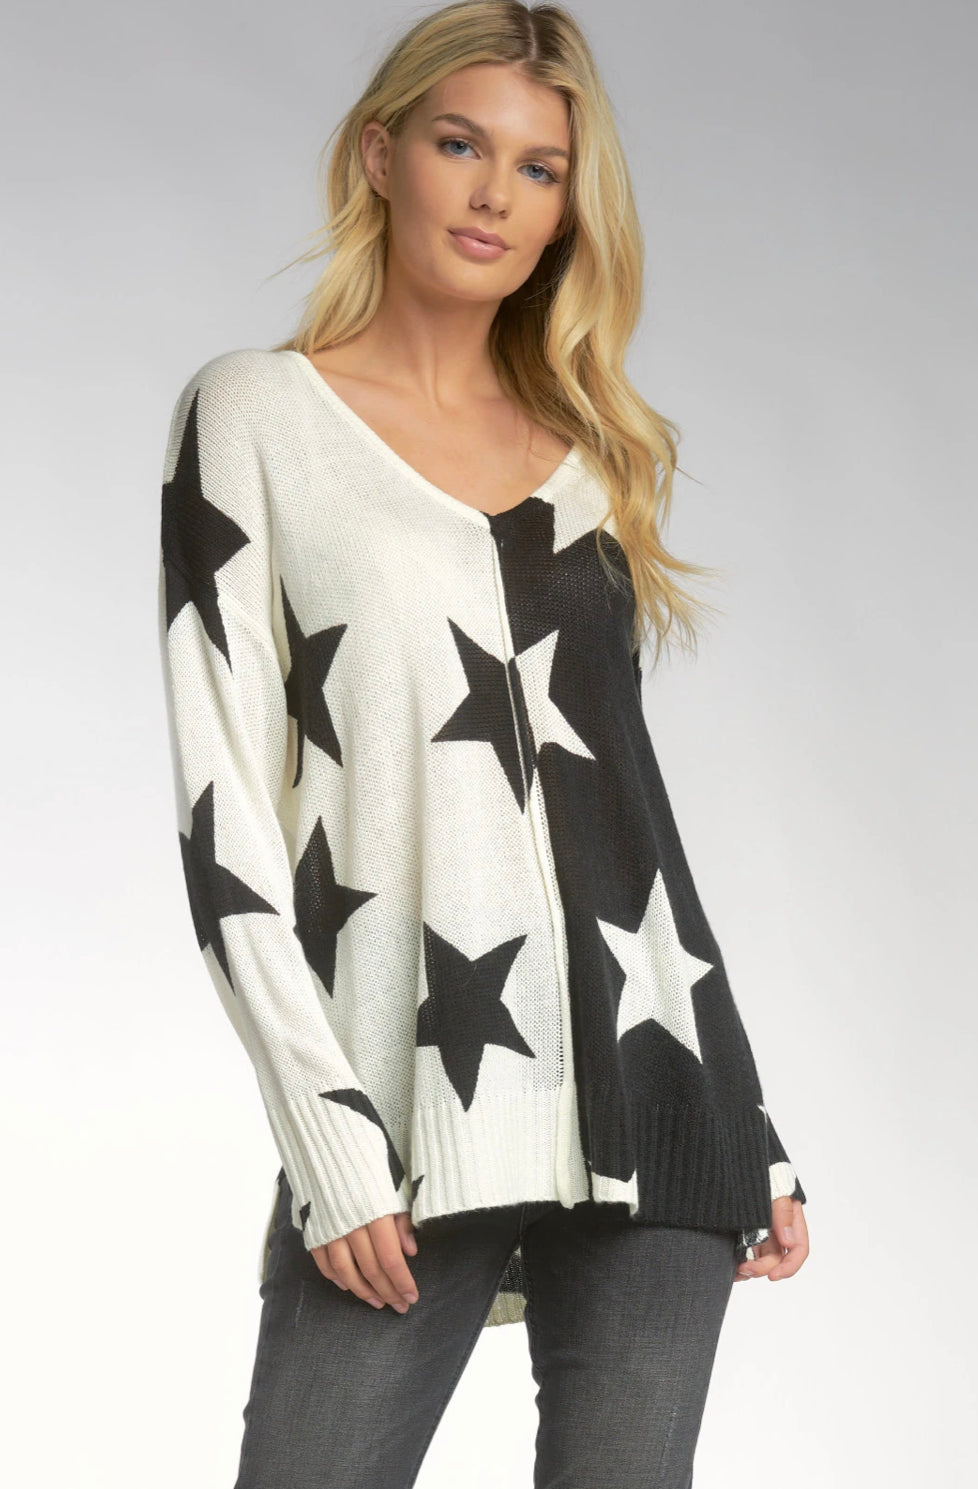 Starcrossed Sweater